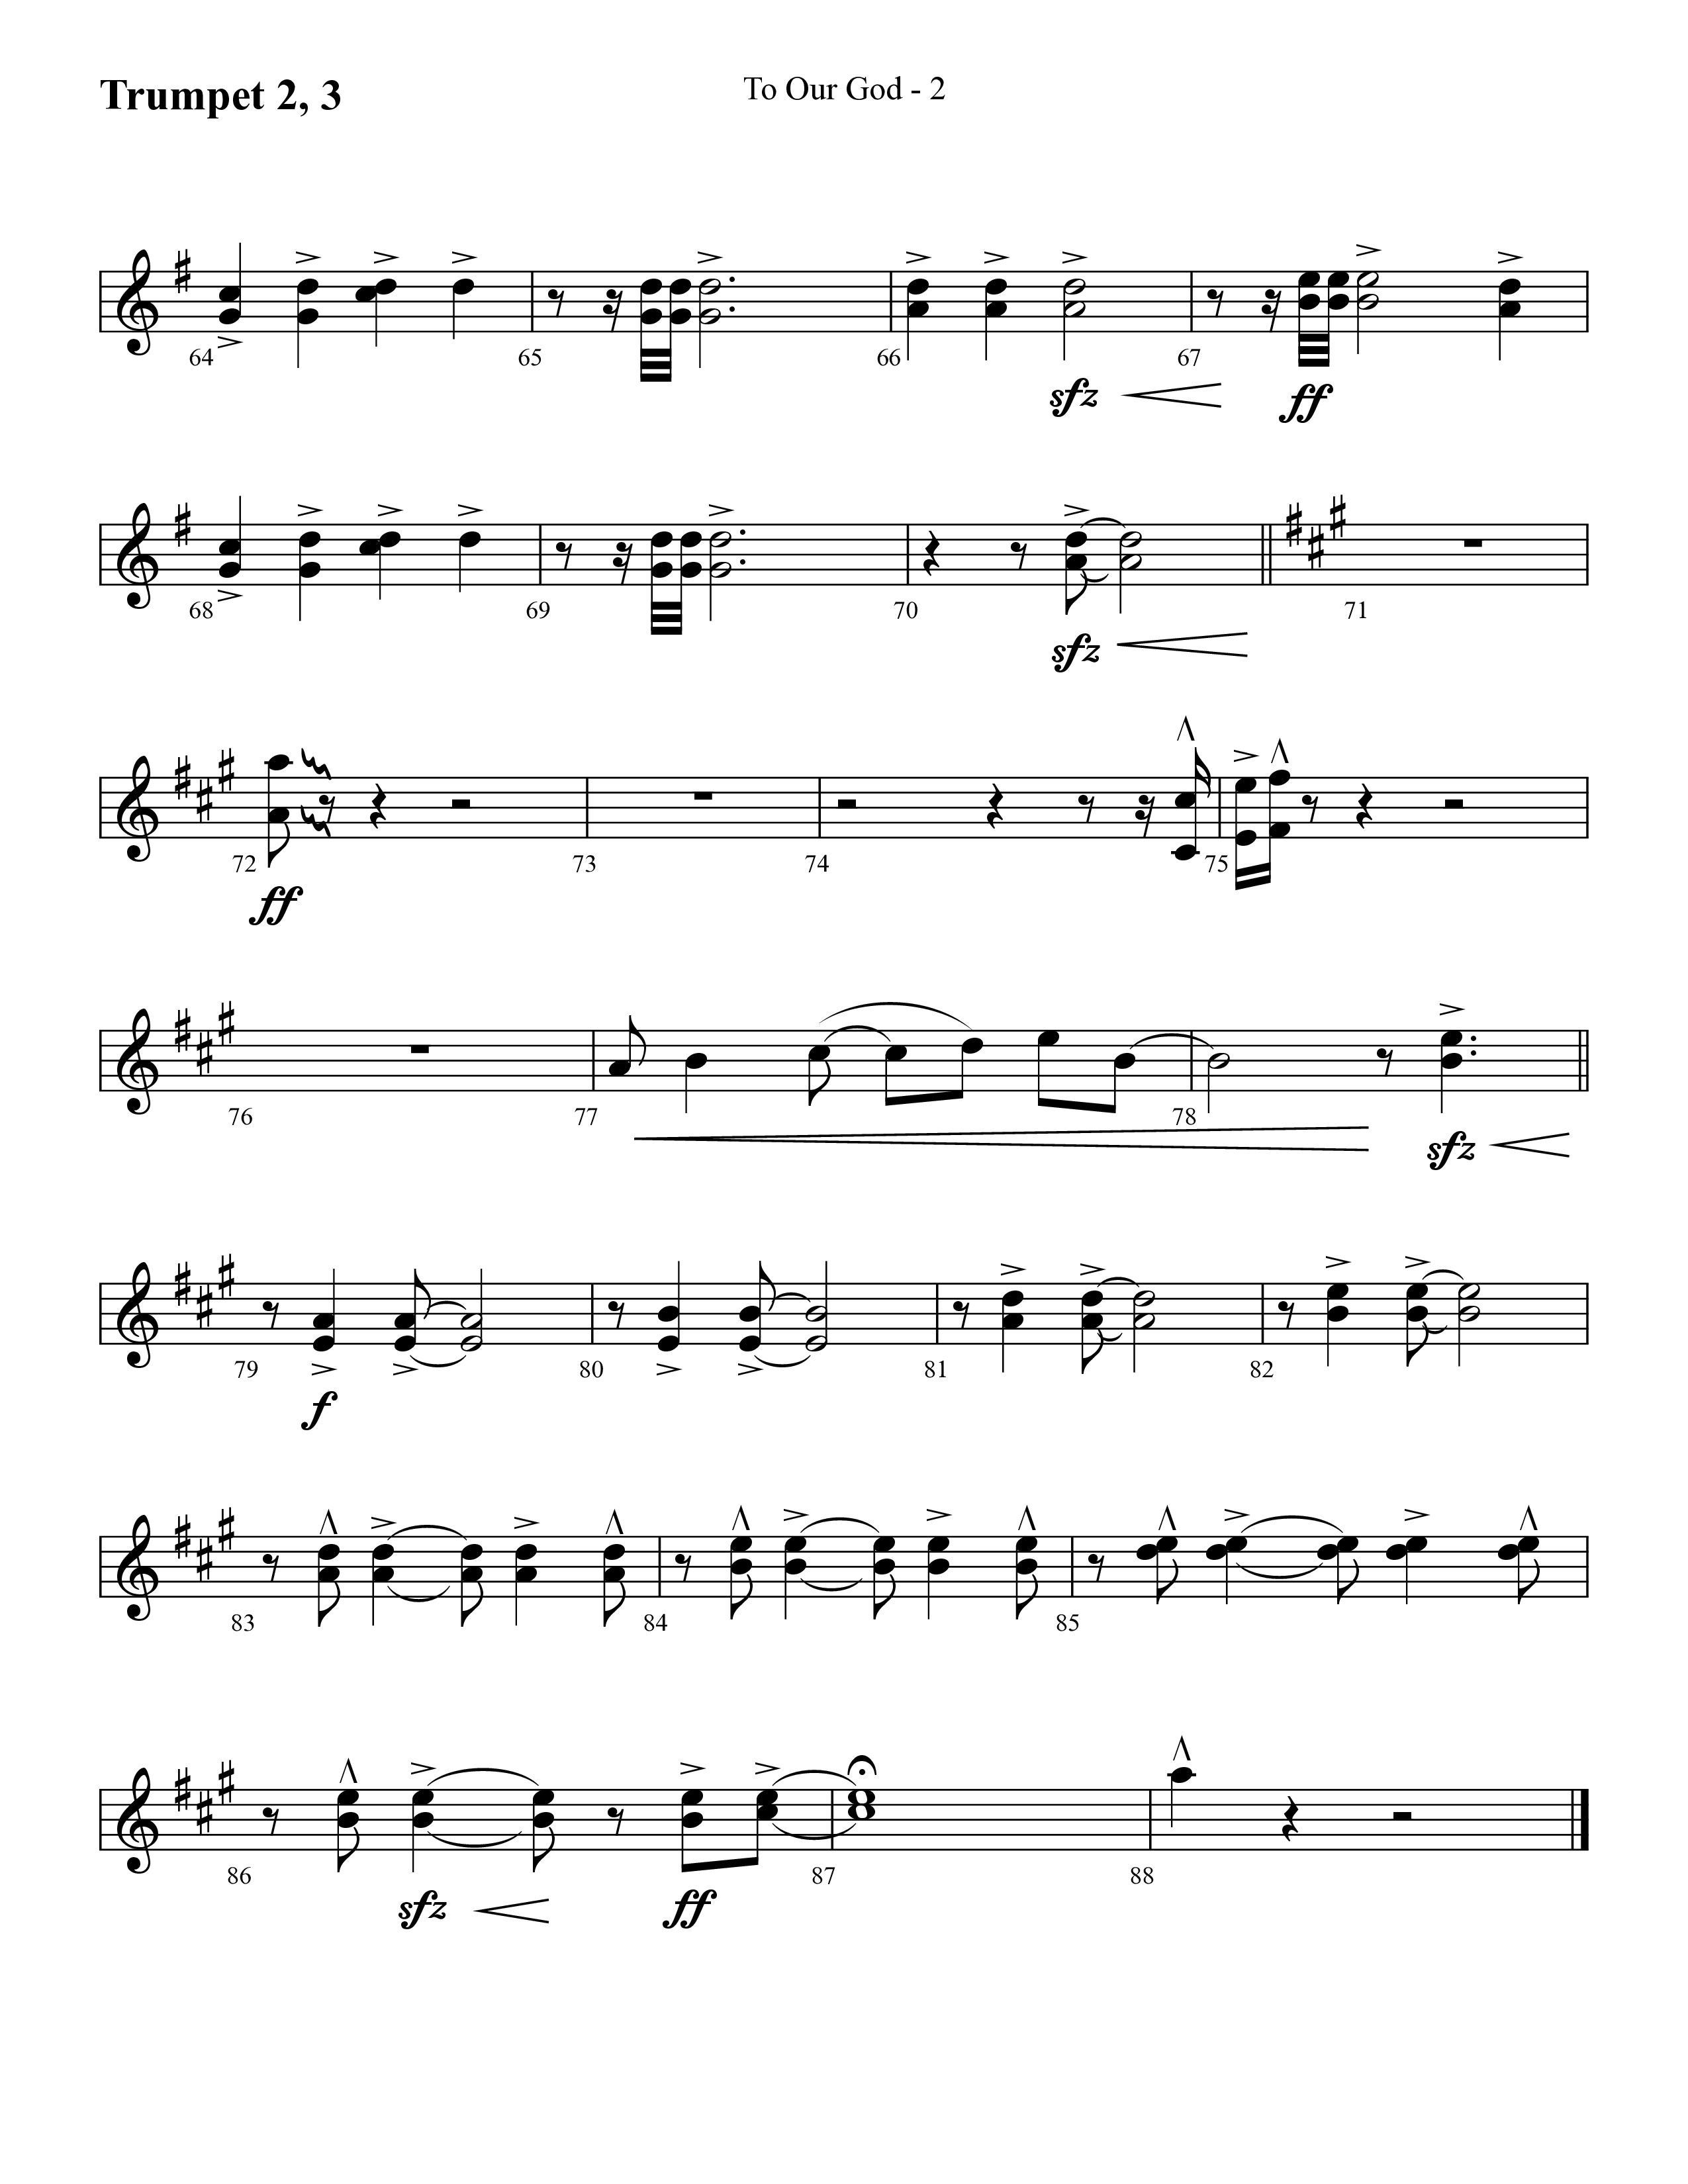 To Our God (Choral Anthem SATB) Trumpet 2/3 (Lifeway Choral / Arr. Cliff Duren)